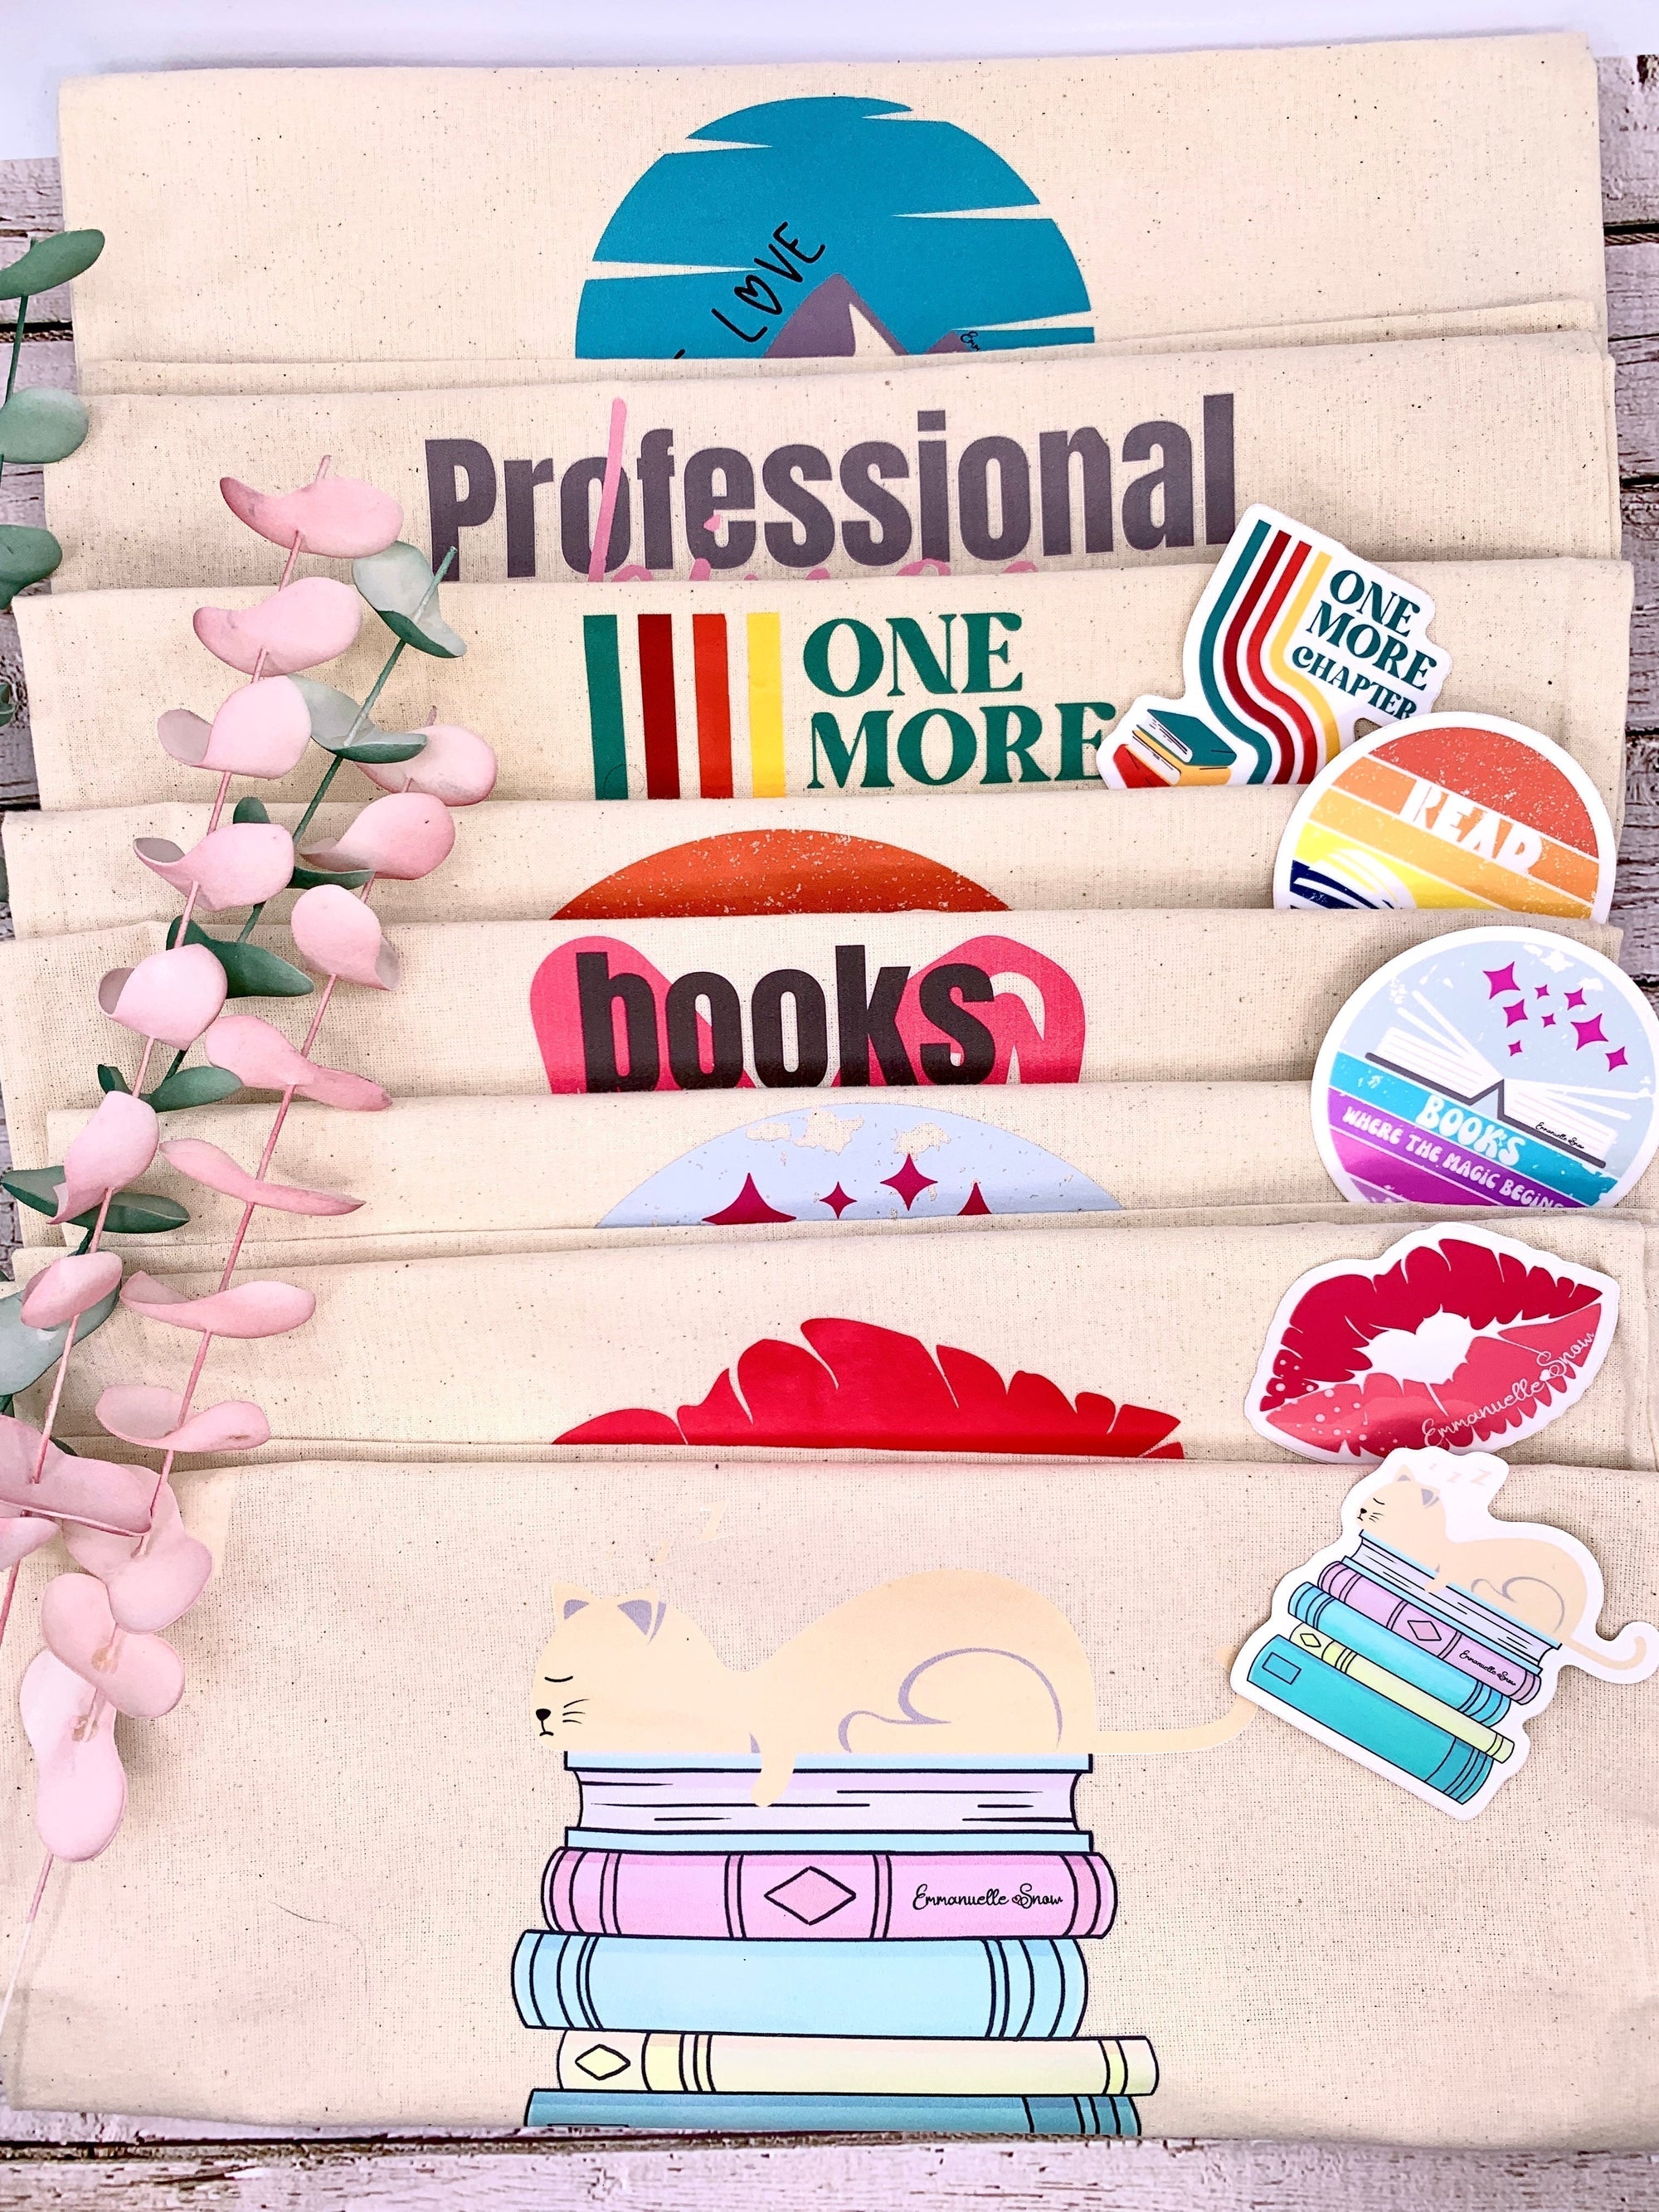 Emmanuelle Snow collection book store merch sticker funny book club bookworm statement steamy romance